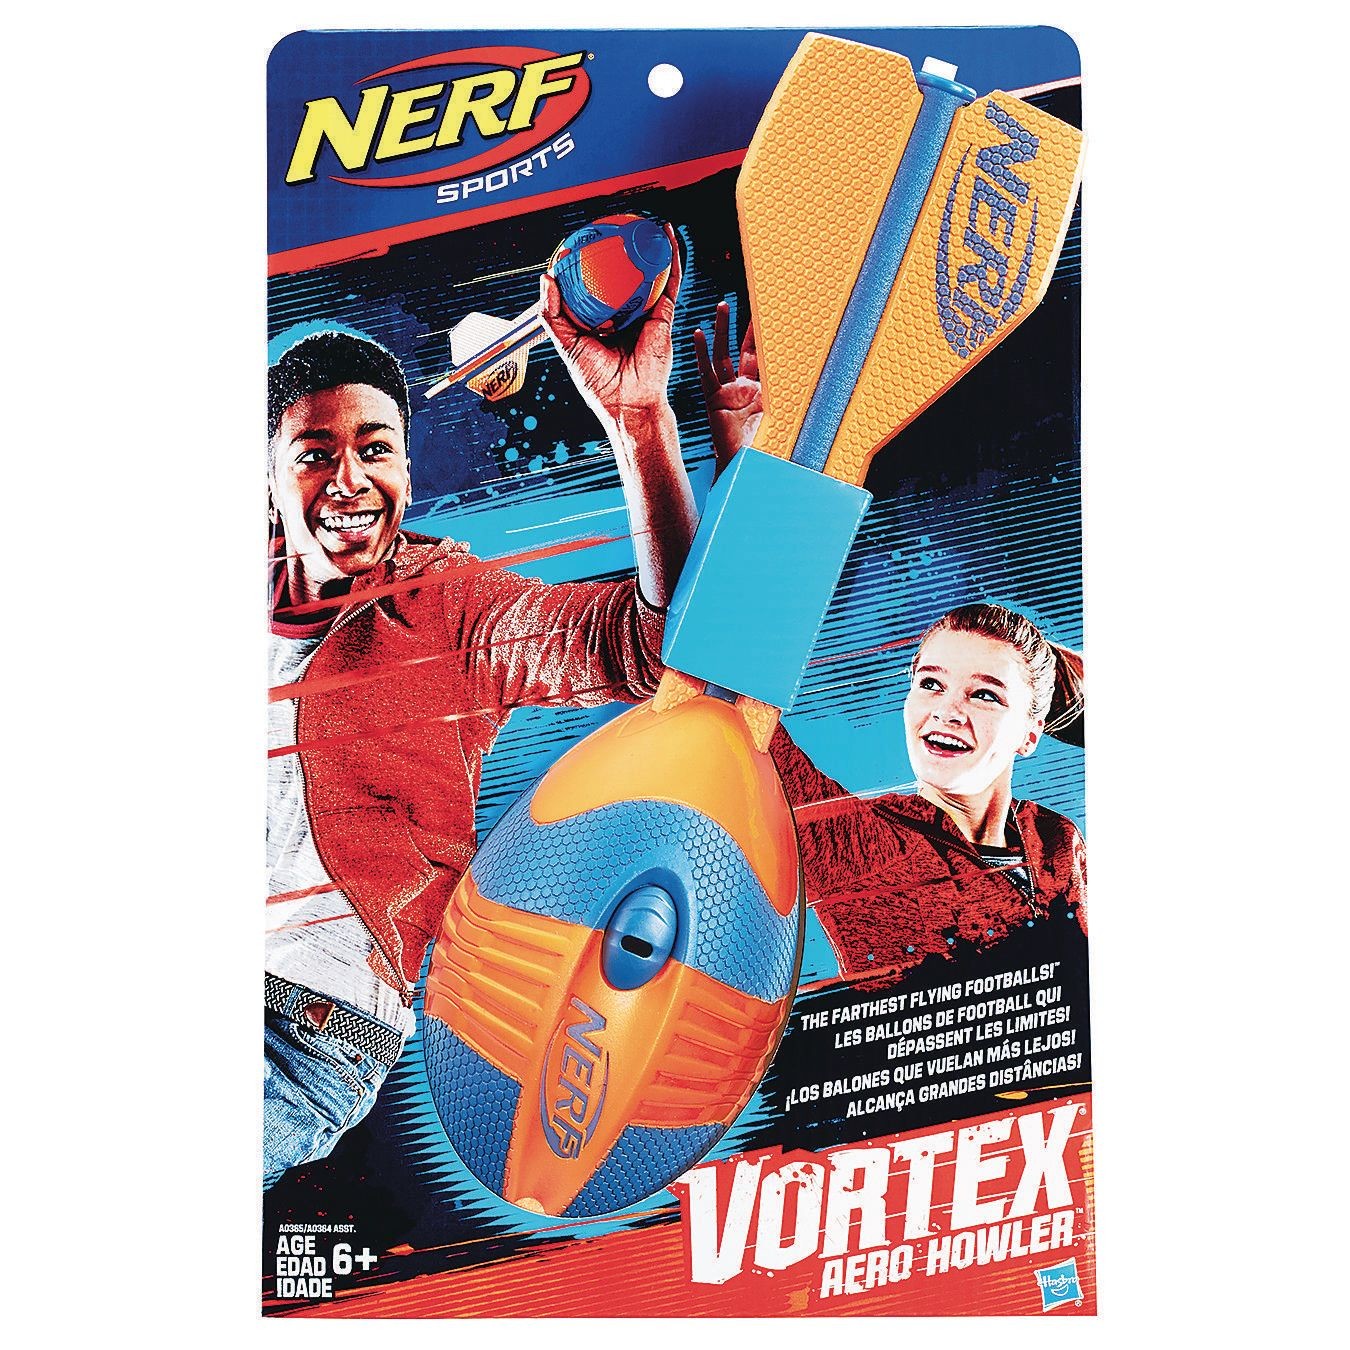 Indien sofa Gods Buy Nerf Sports Vortex Aero Howler Football at S&S Worldwide